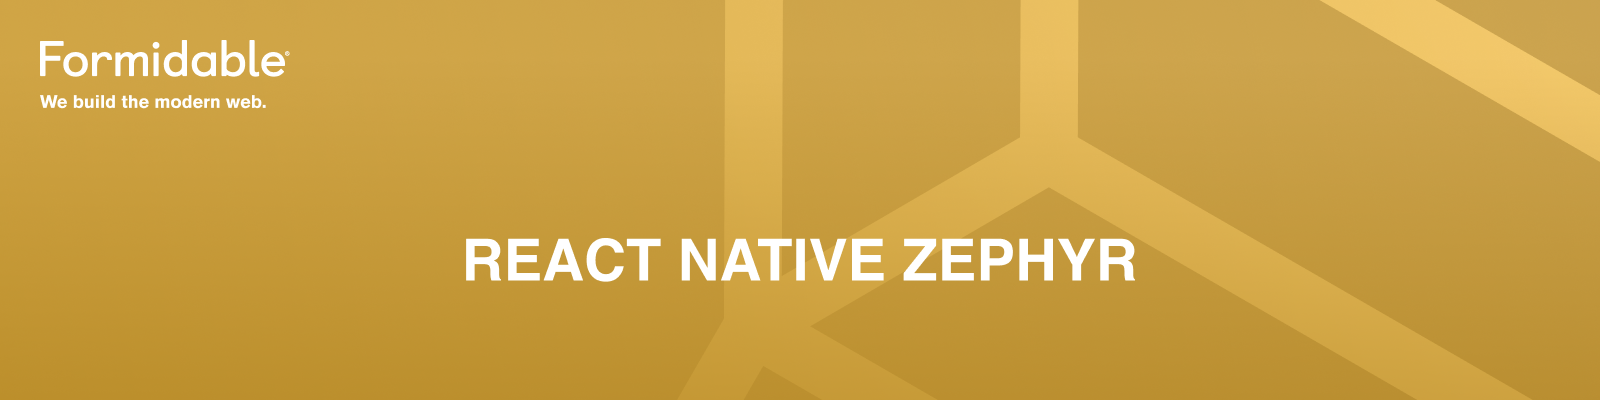 react-native-zephyr-Hero.png